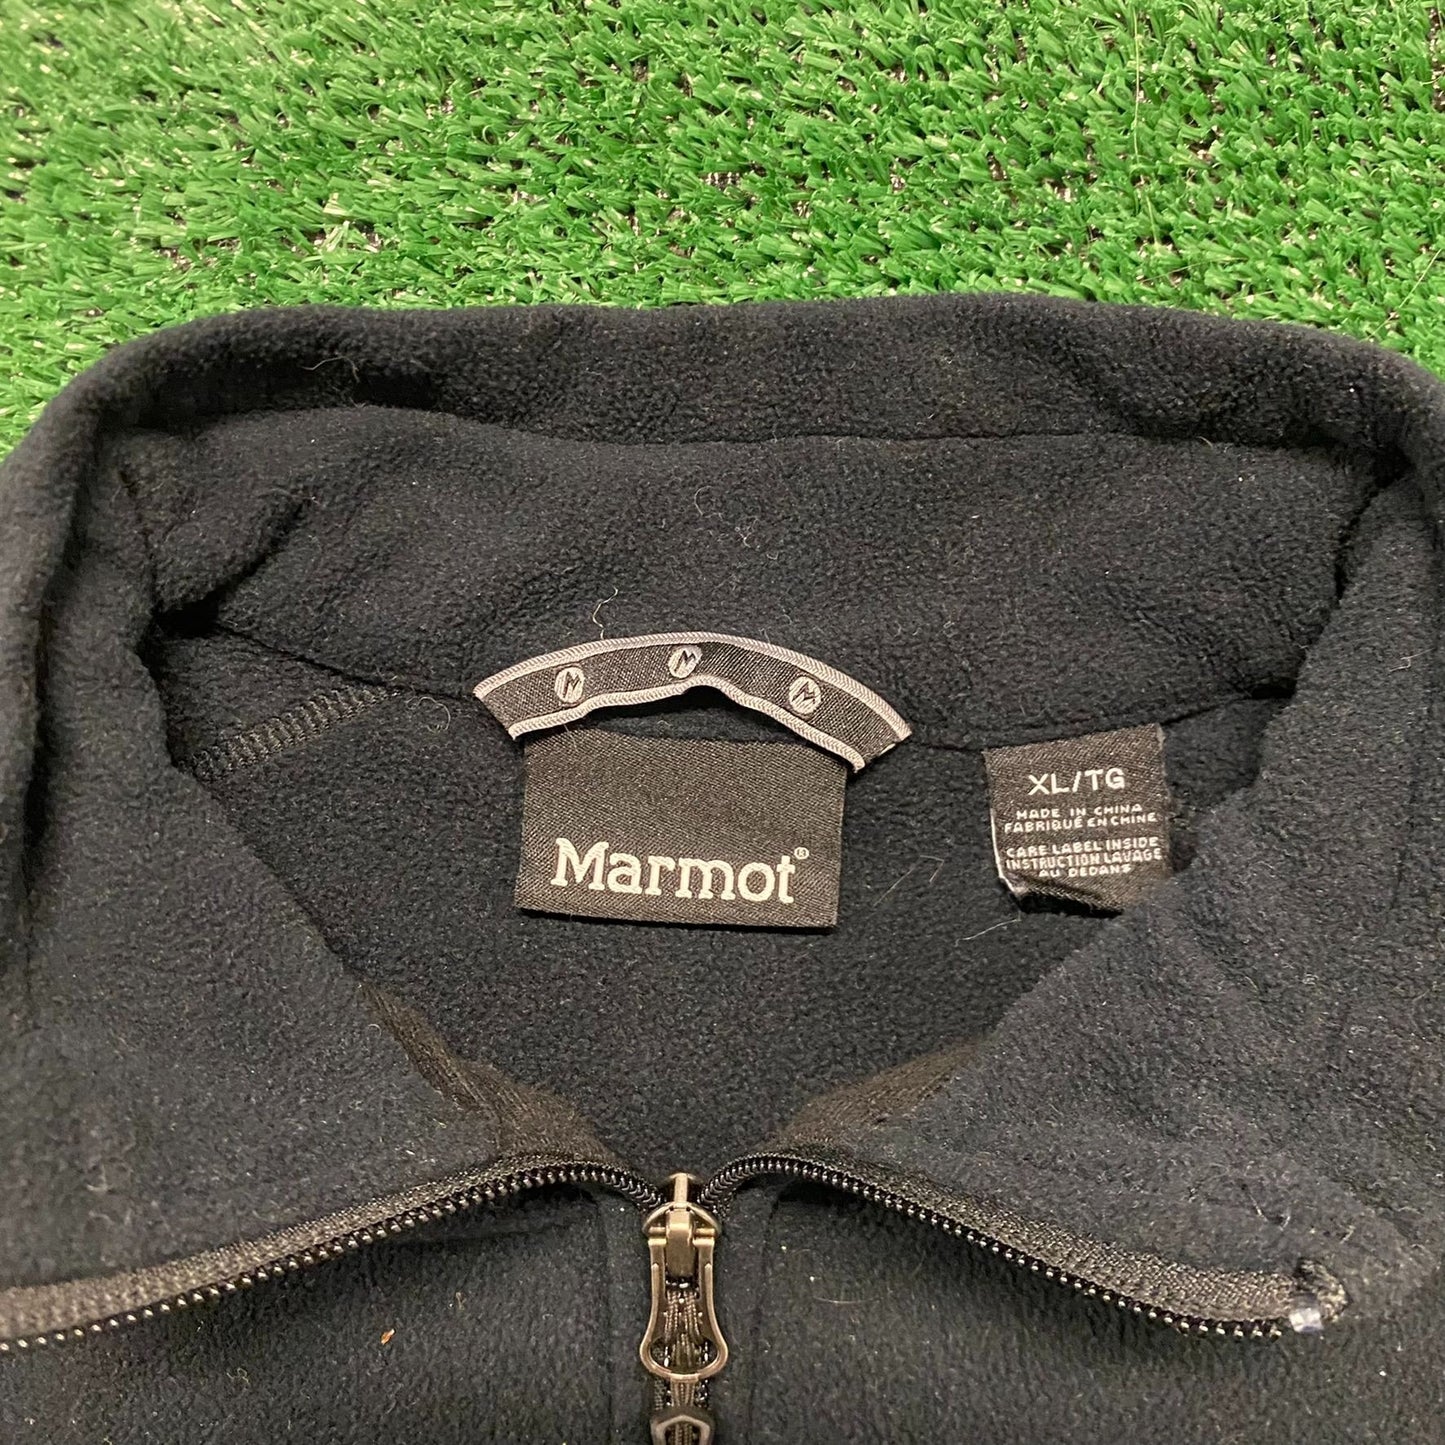 Marmot Black Full Zip Fleece Outdoors Hiking Jacket